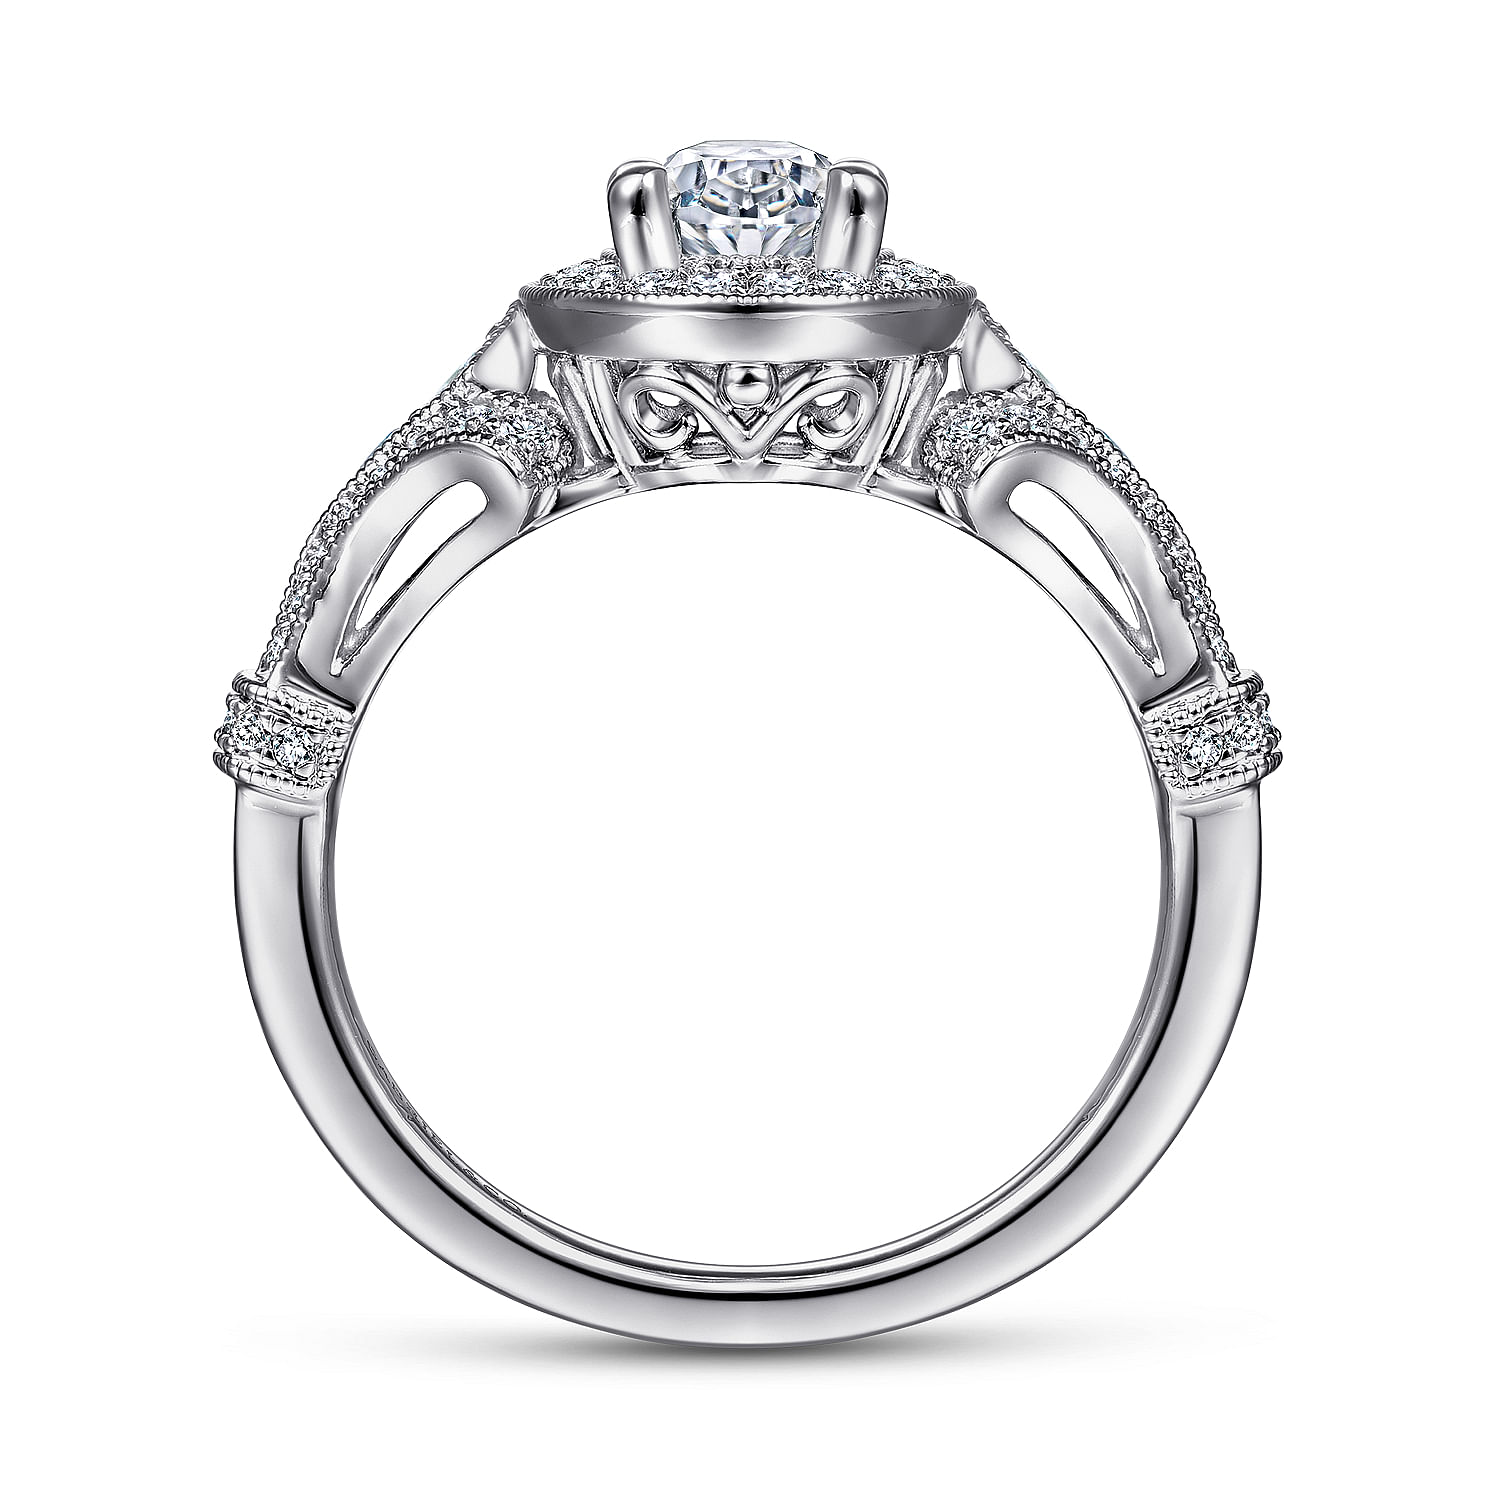 Vintage Inspired 14K White Gold Oval Halo Diamond Engagement Ring